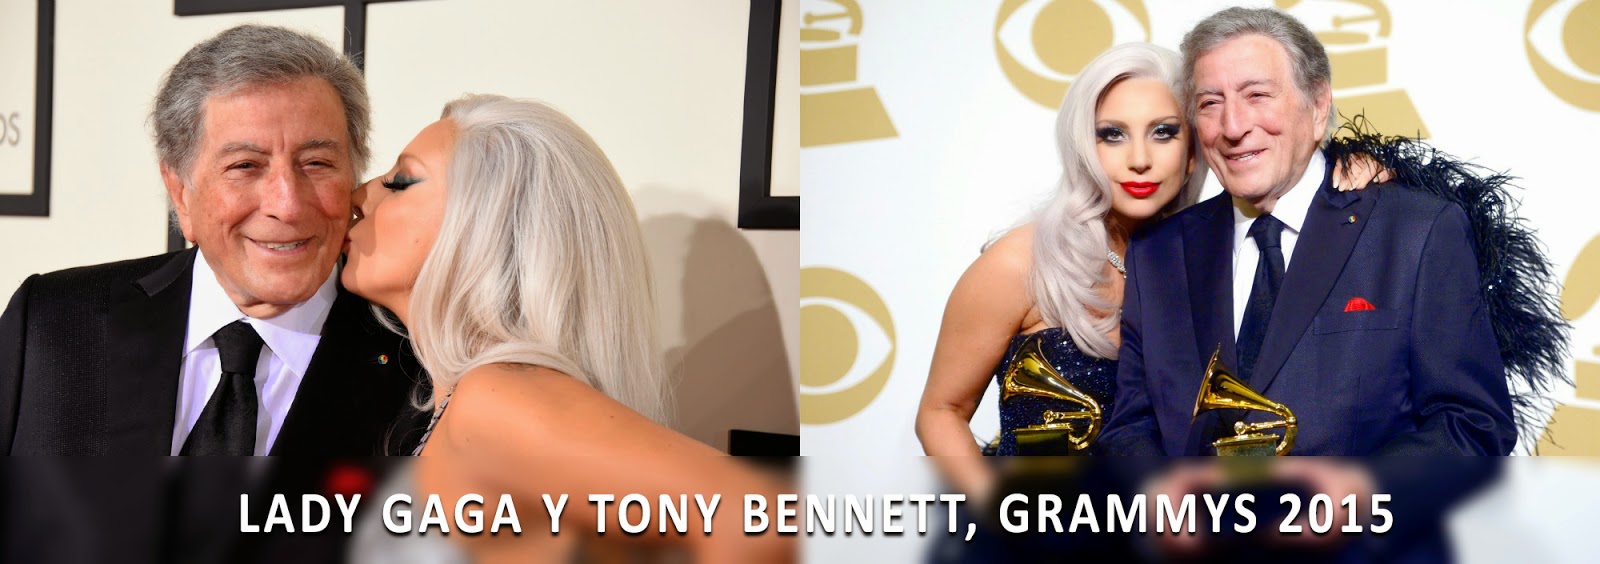 Lady Gaga y Tony Bennett, Grammys 2015